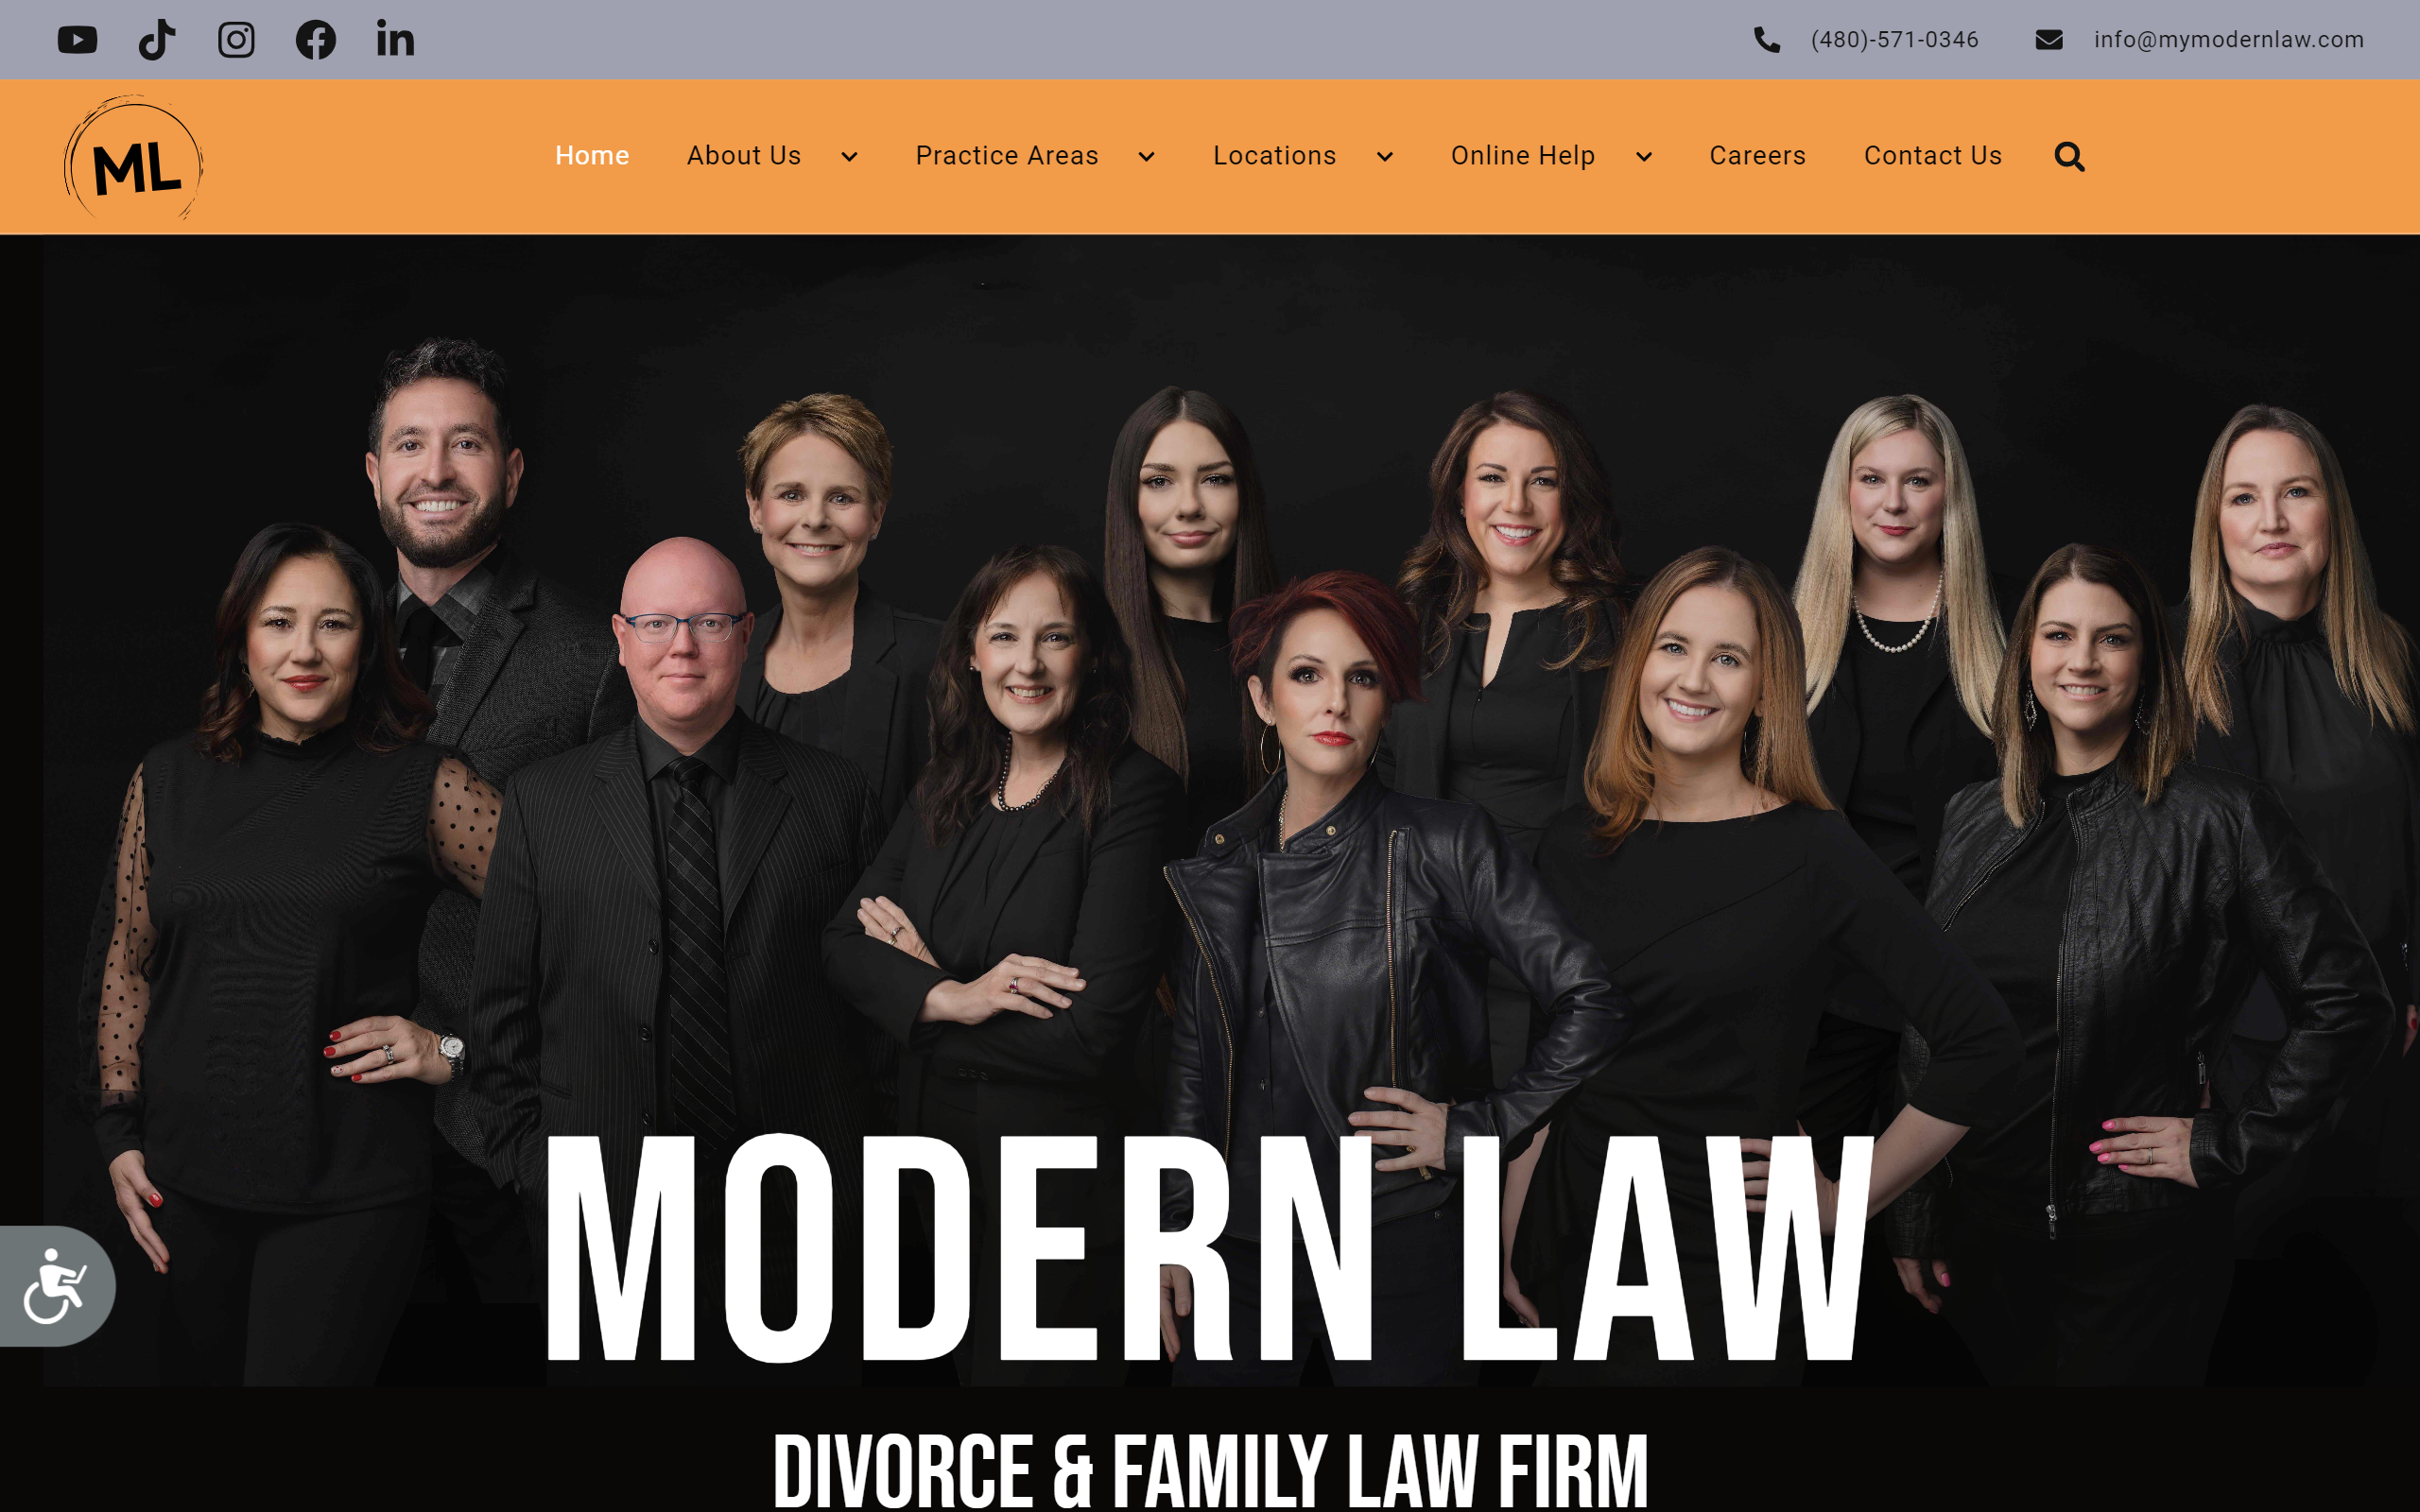 Modern Law firm websites